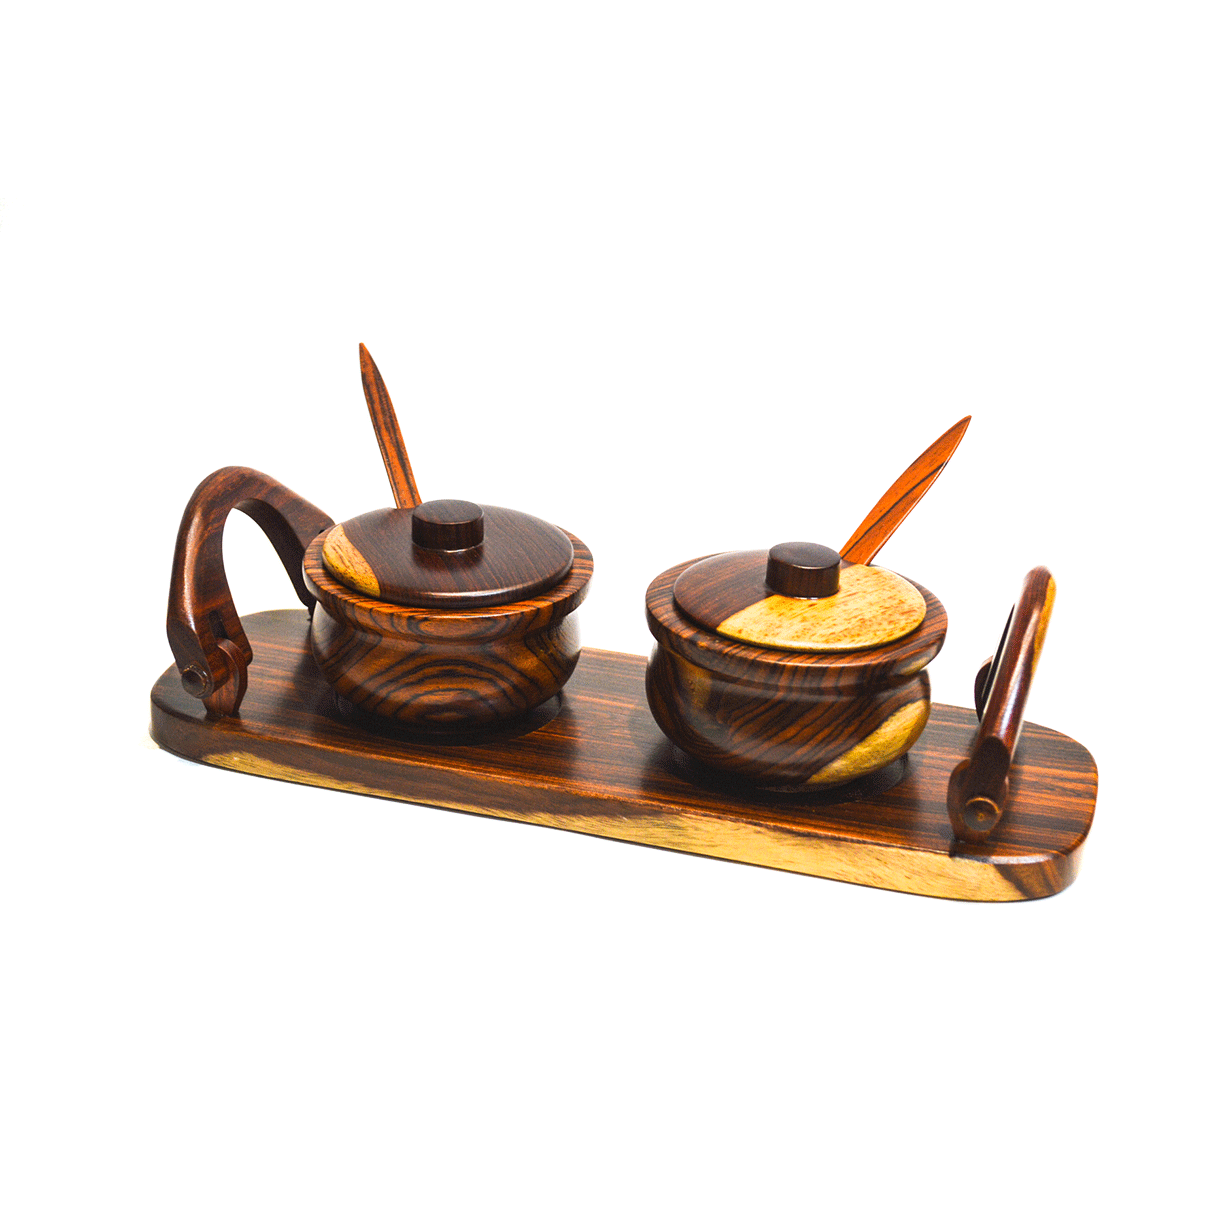 www.costaricacongo.com www.costaricagiftshops.com gift souvenir handmade Wooden tray with 2 pots Sauce platter